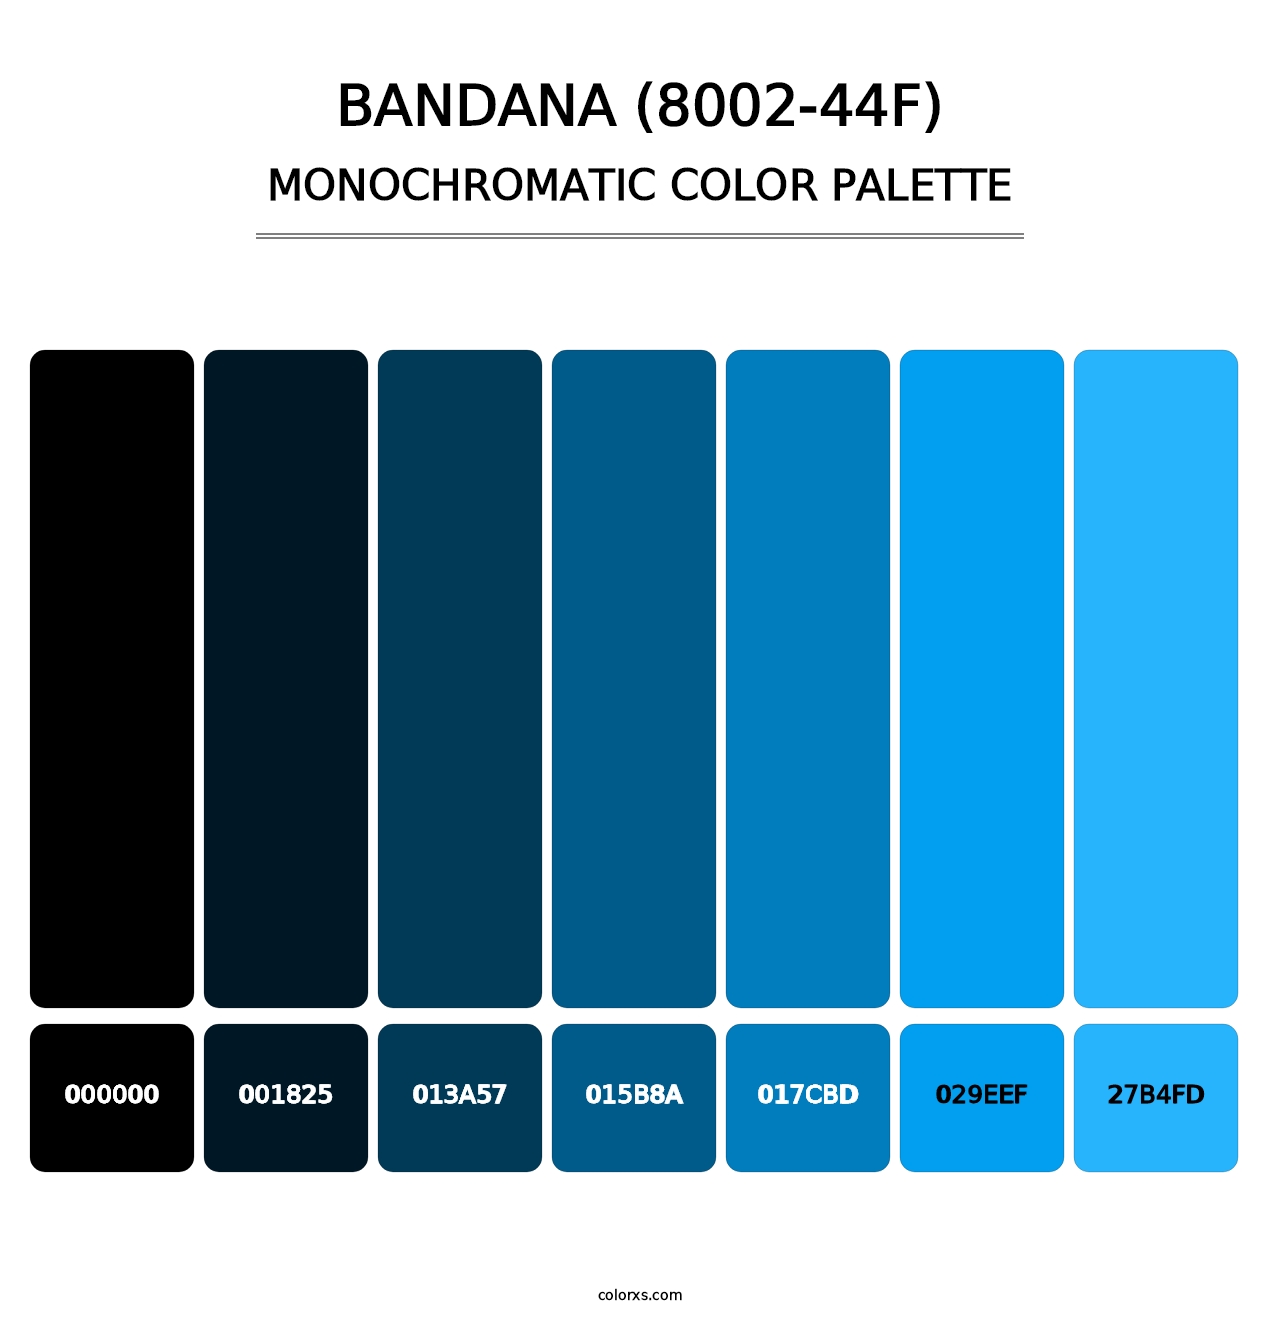 Bandana (8002-44F) - Monochromatic Color Palette